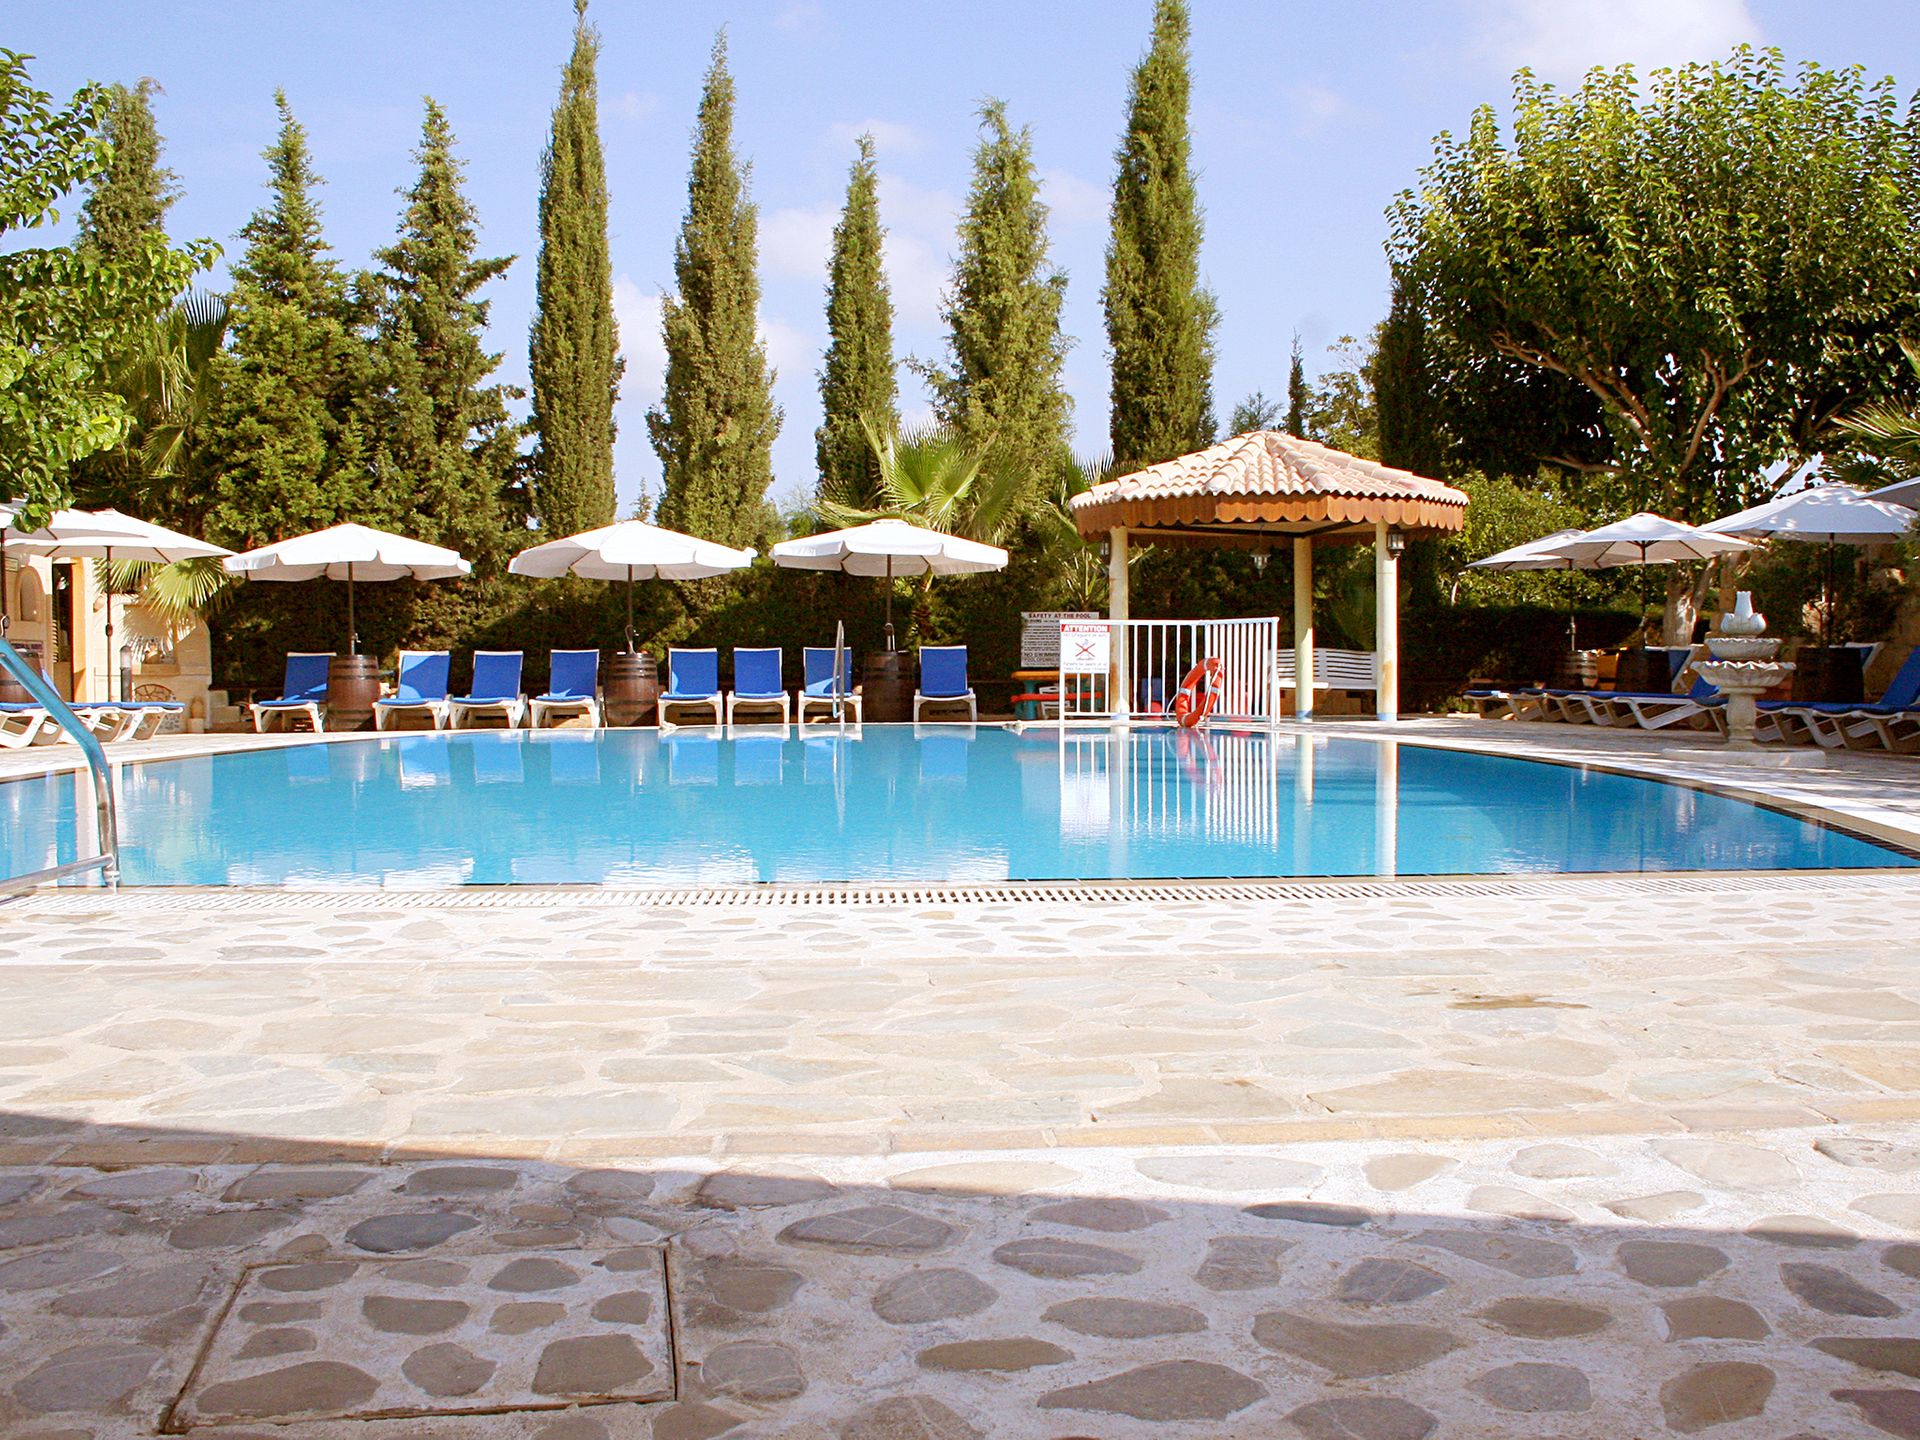 Apollonia Holiday Apartments - Πάφος, Κύπρος ✦ 4 Ημέρες (3 Διανυκτερεύσεις) ✦ 2 άτομα ✦ Χωρίς Πρωινό ✦ έως 31/03/2022 ✦ Μοναδική Τοποθεσία!